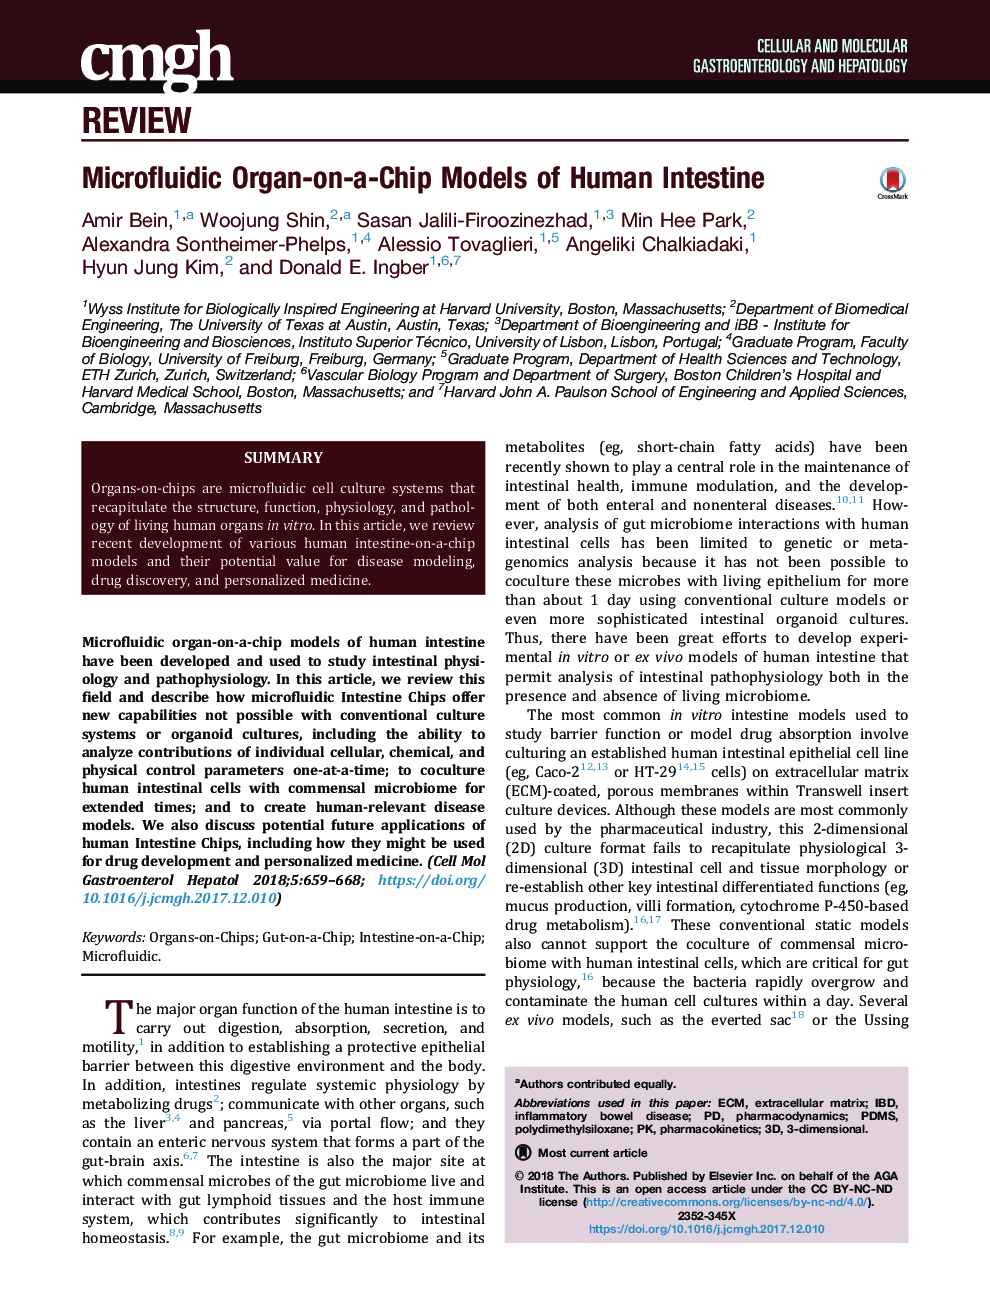 Microfluidic Organ-on-a-Chip Models of Human Intestine